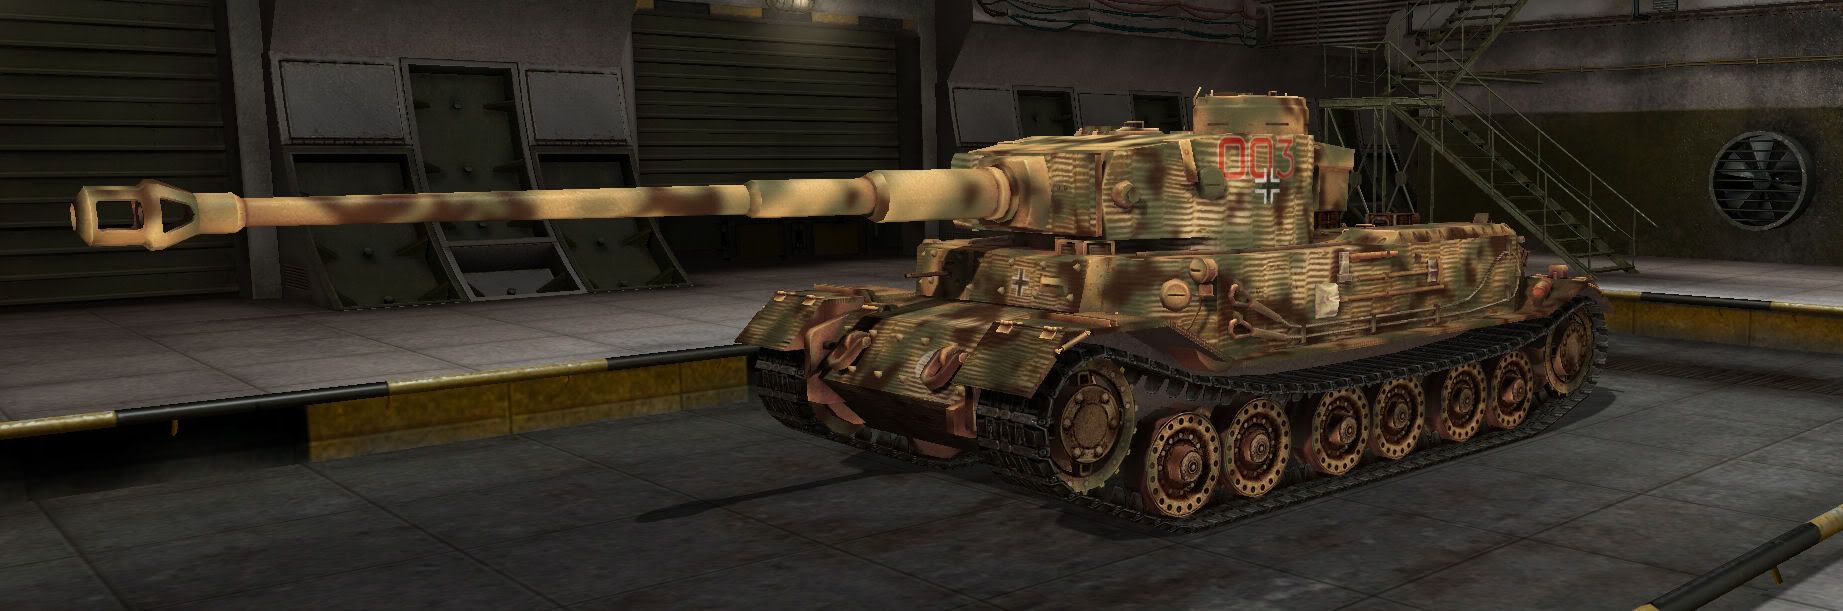 tiger p tank